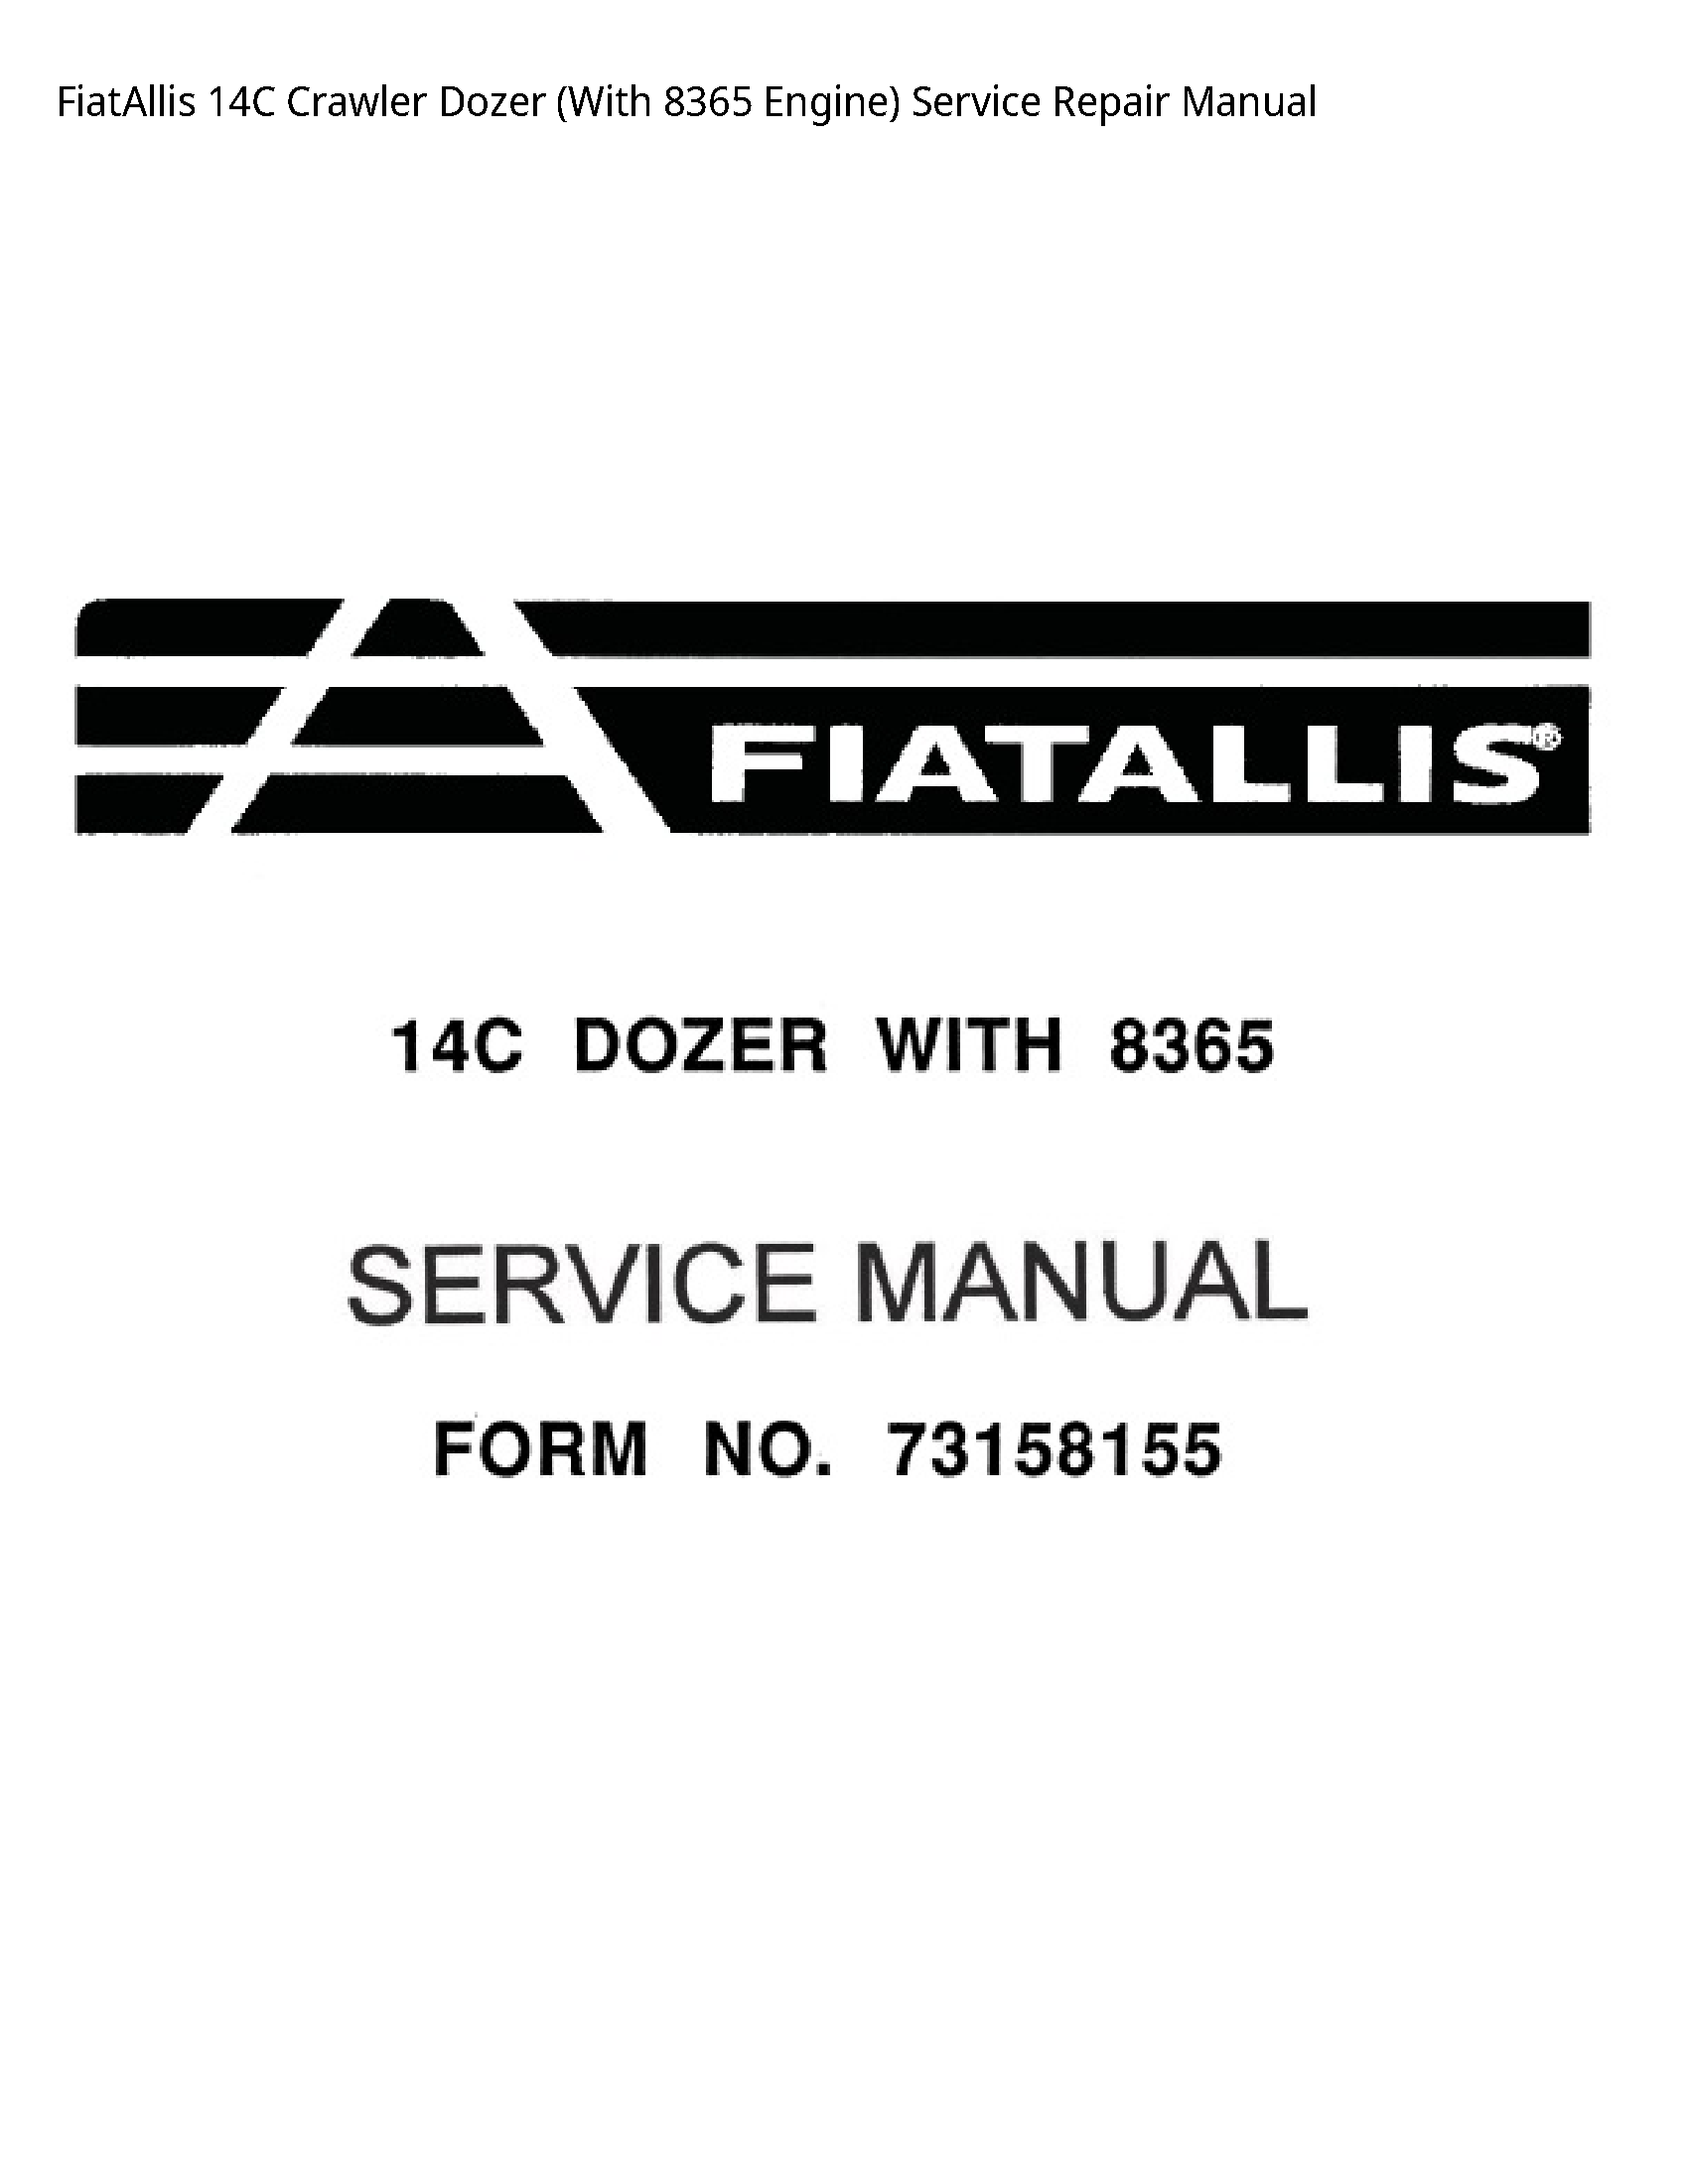 Fiatallis 14C Crawler Dozer (With Engine) manual